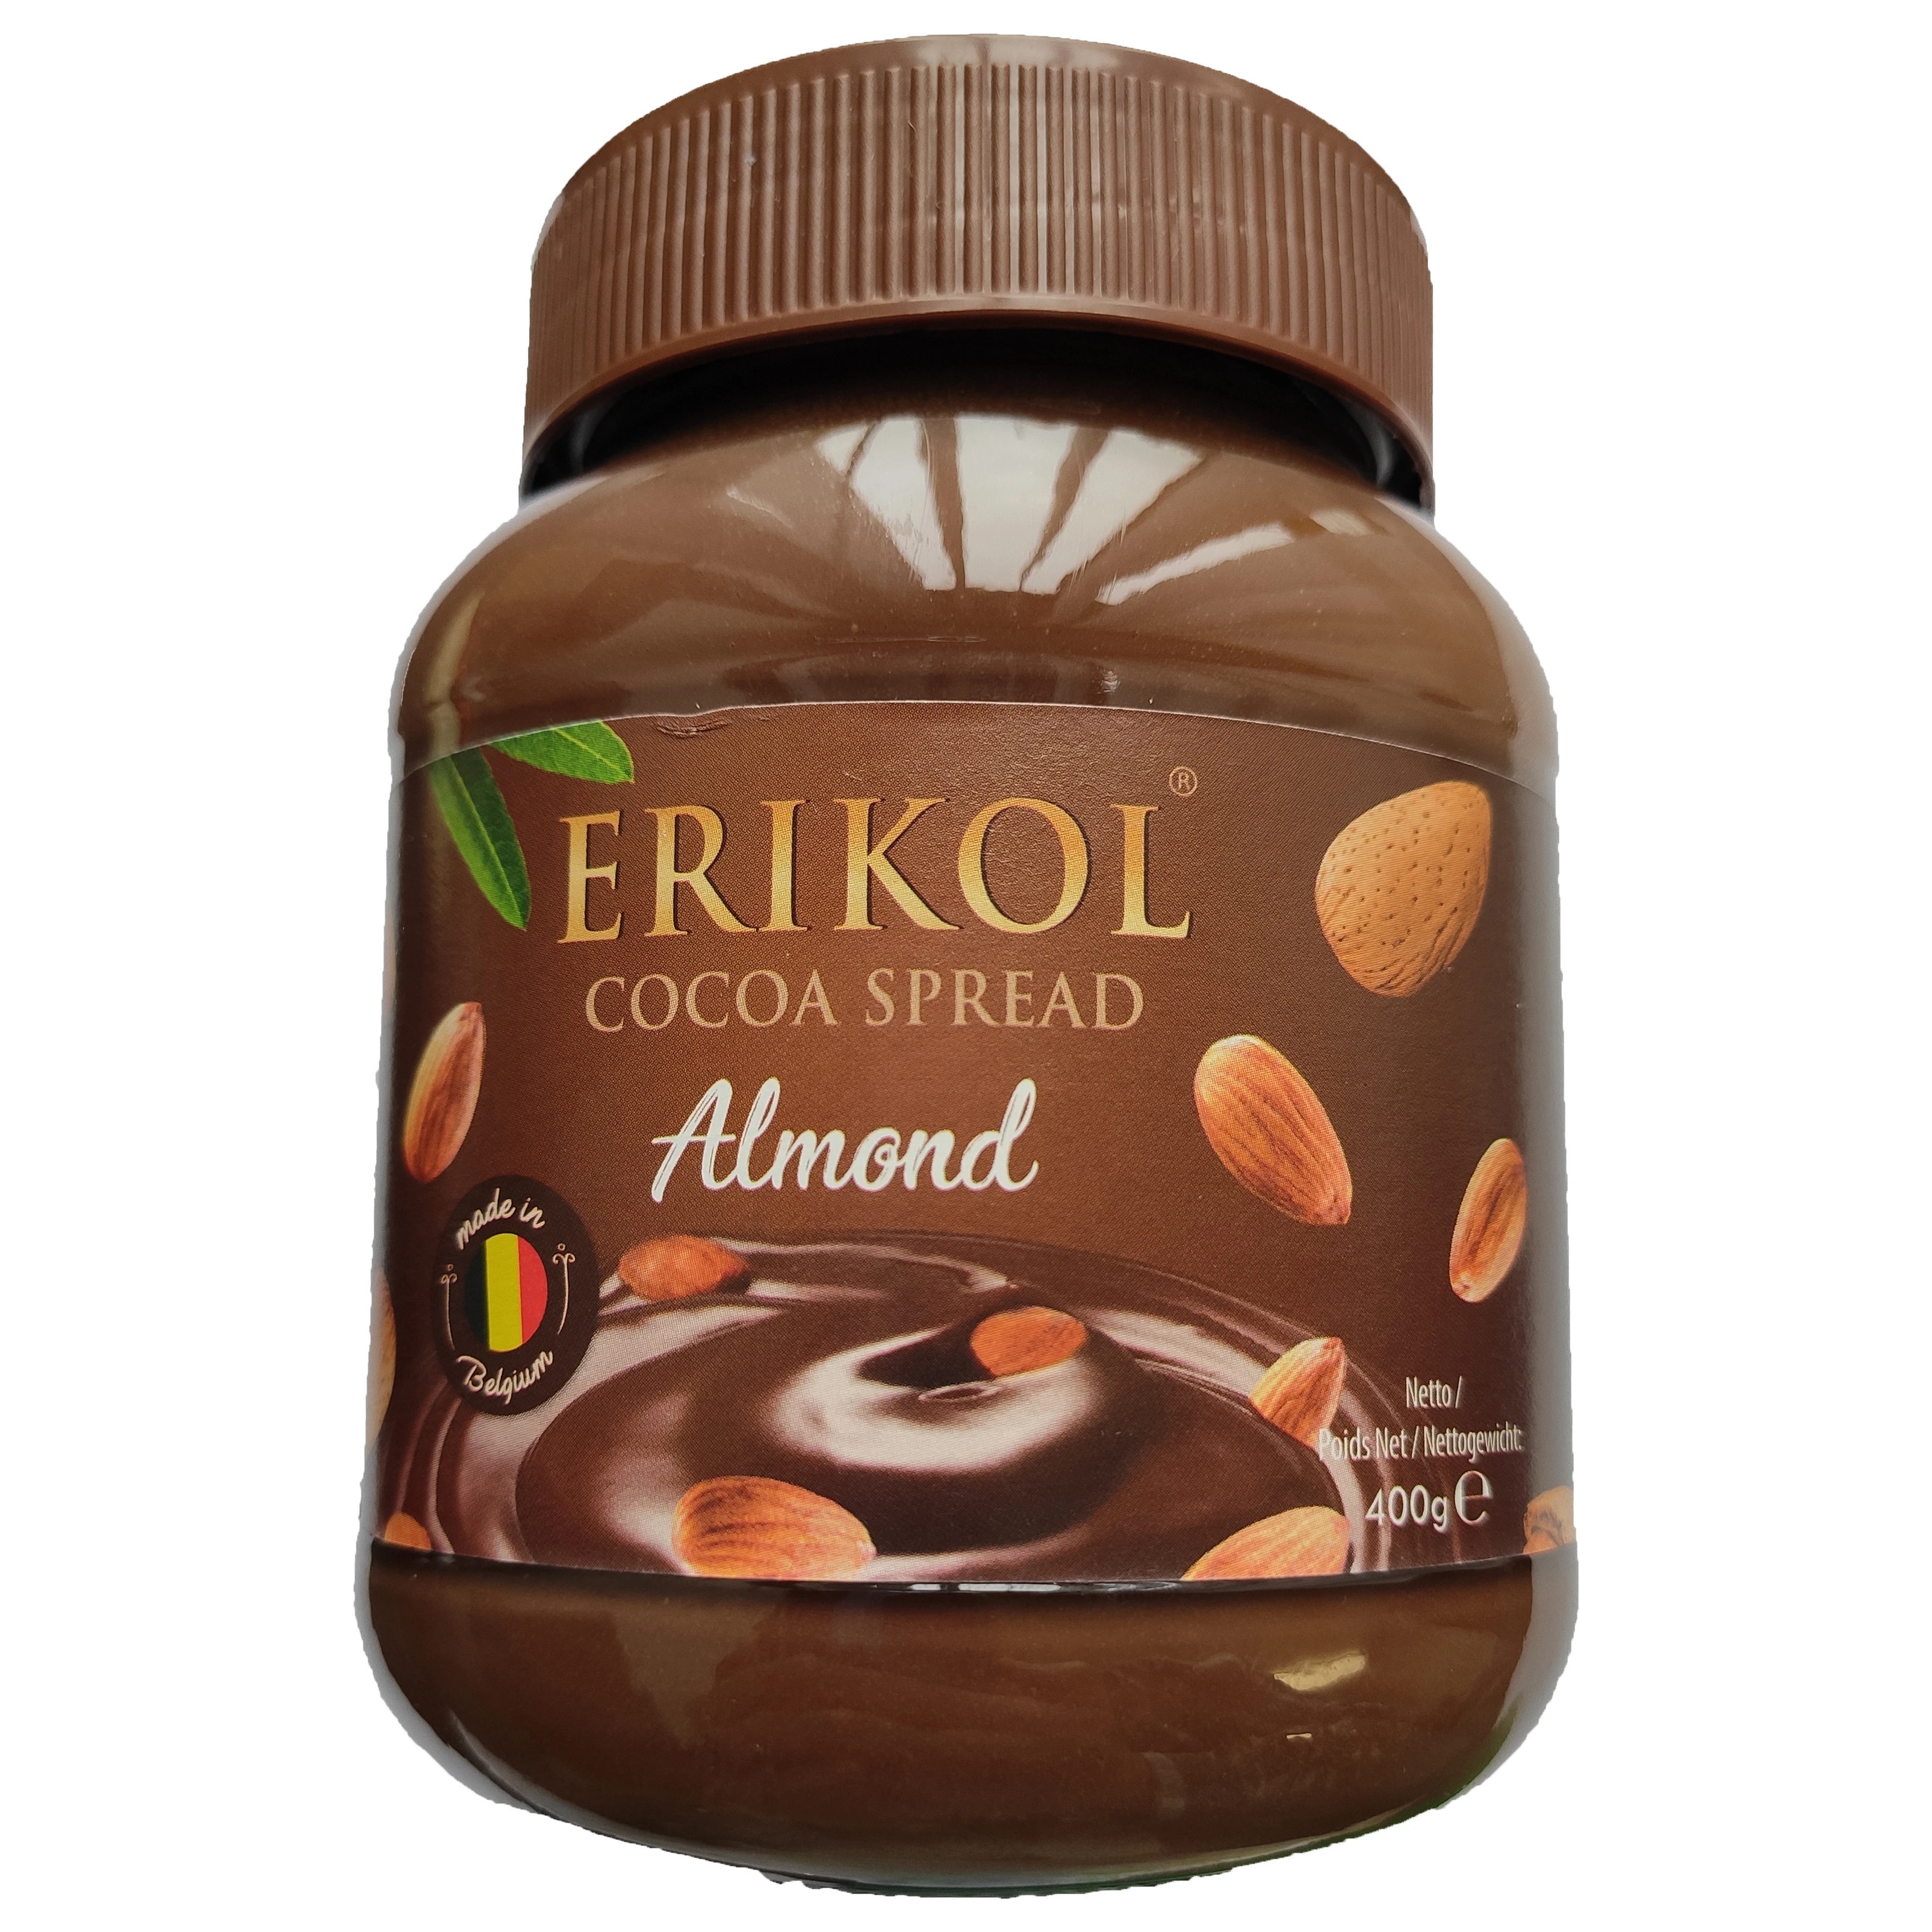 Erikol Hazelnut and Almond Cream, 400g